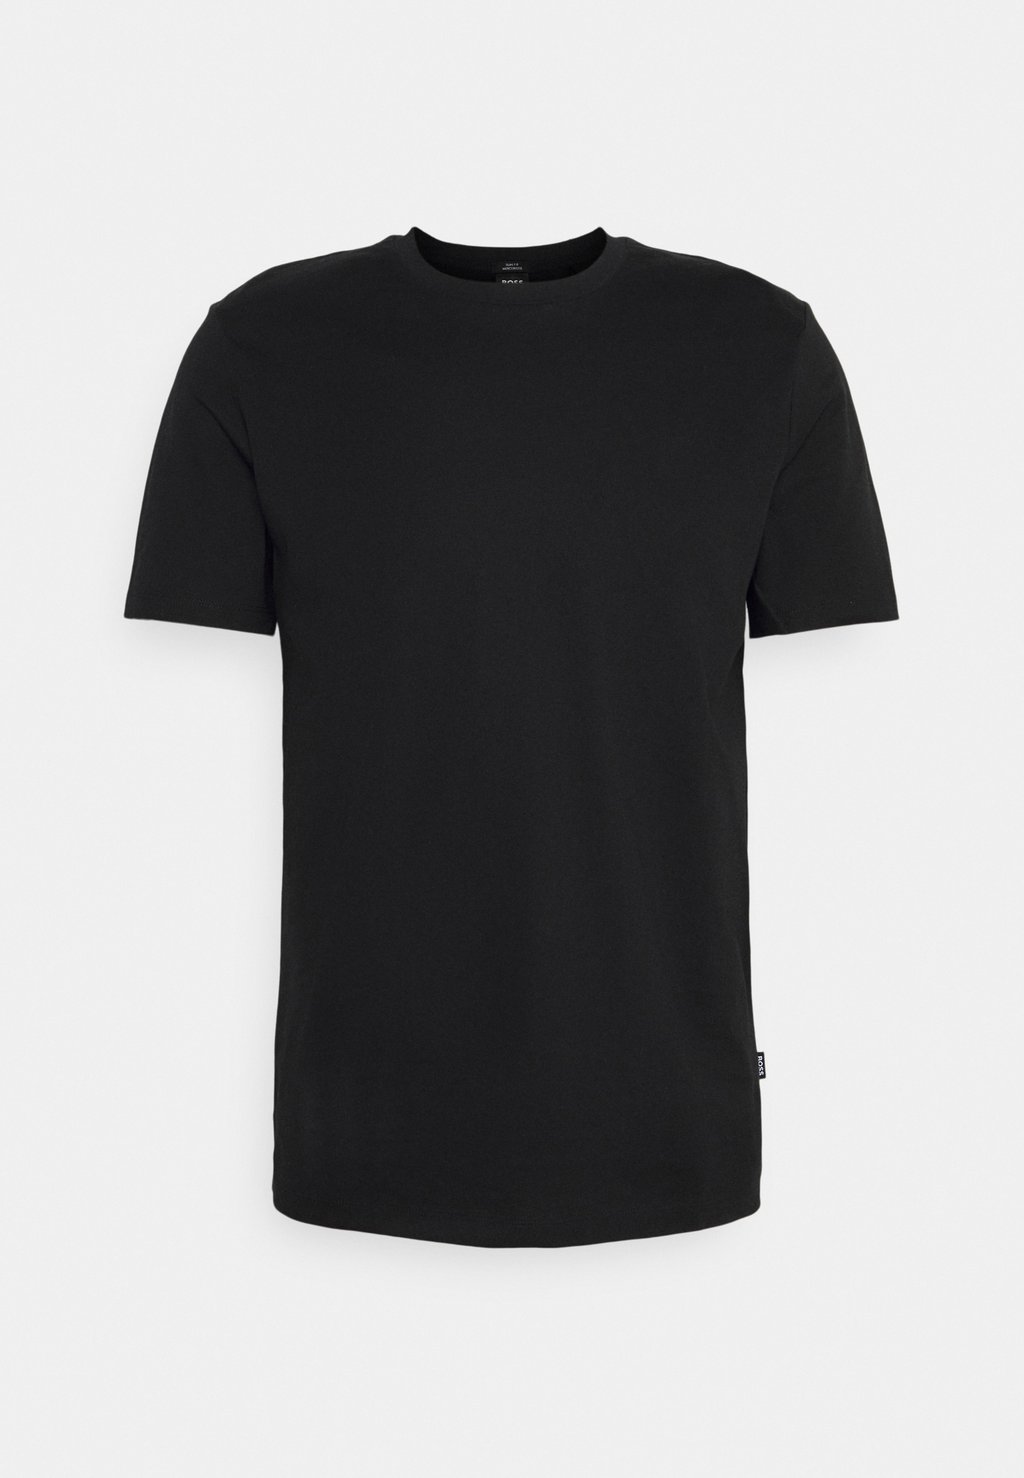 Базовая футболка Tessler BOSS, черный футболки boss футболка tessler